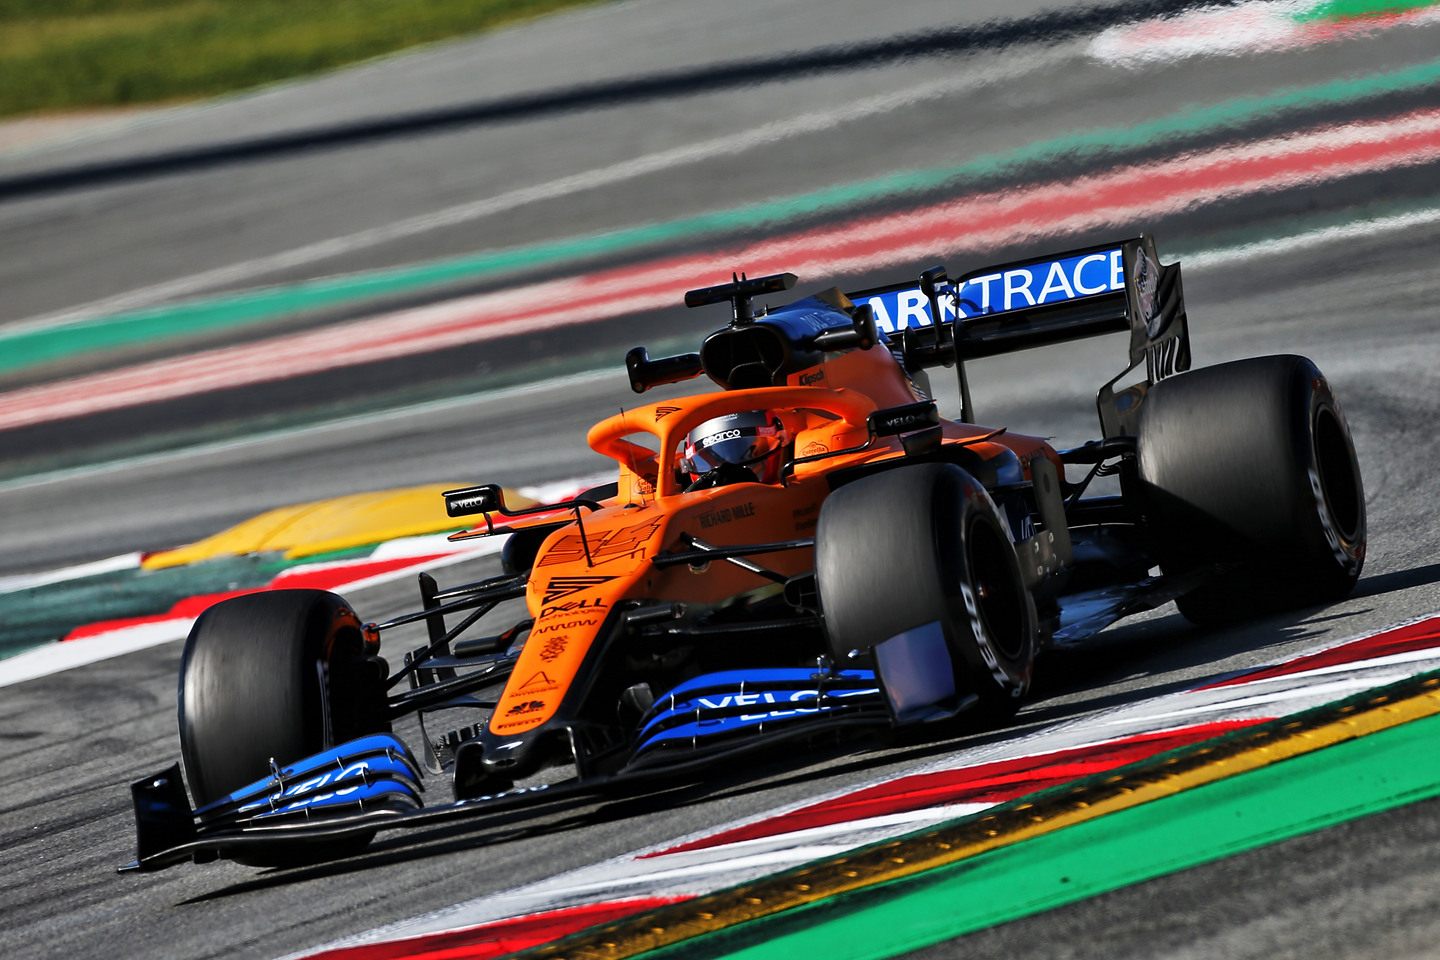 McLaren © the-race.com